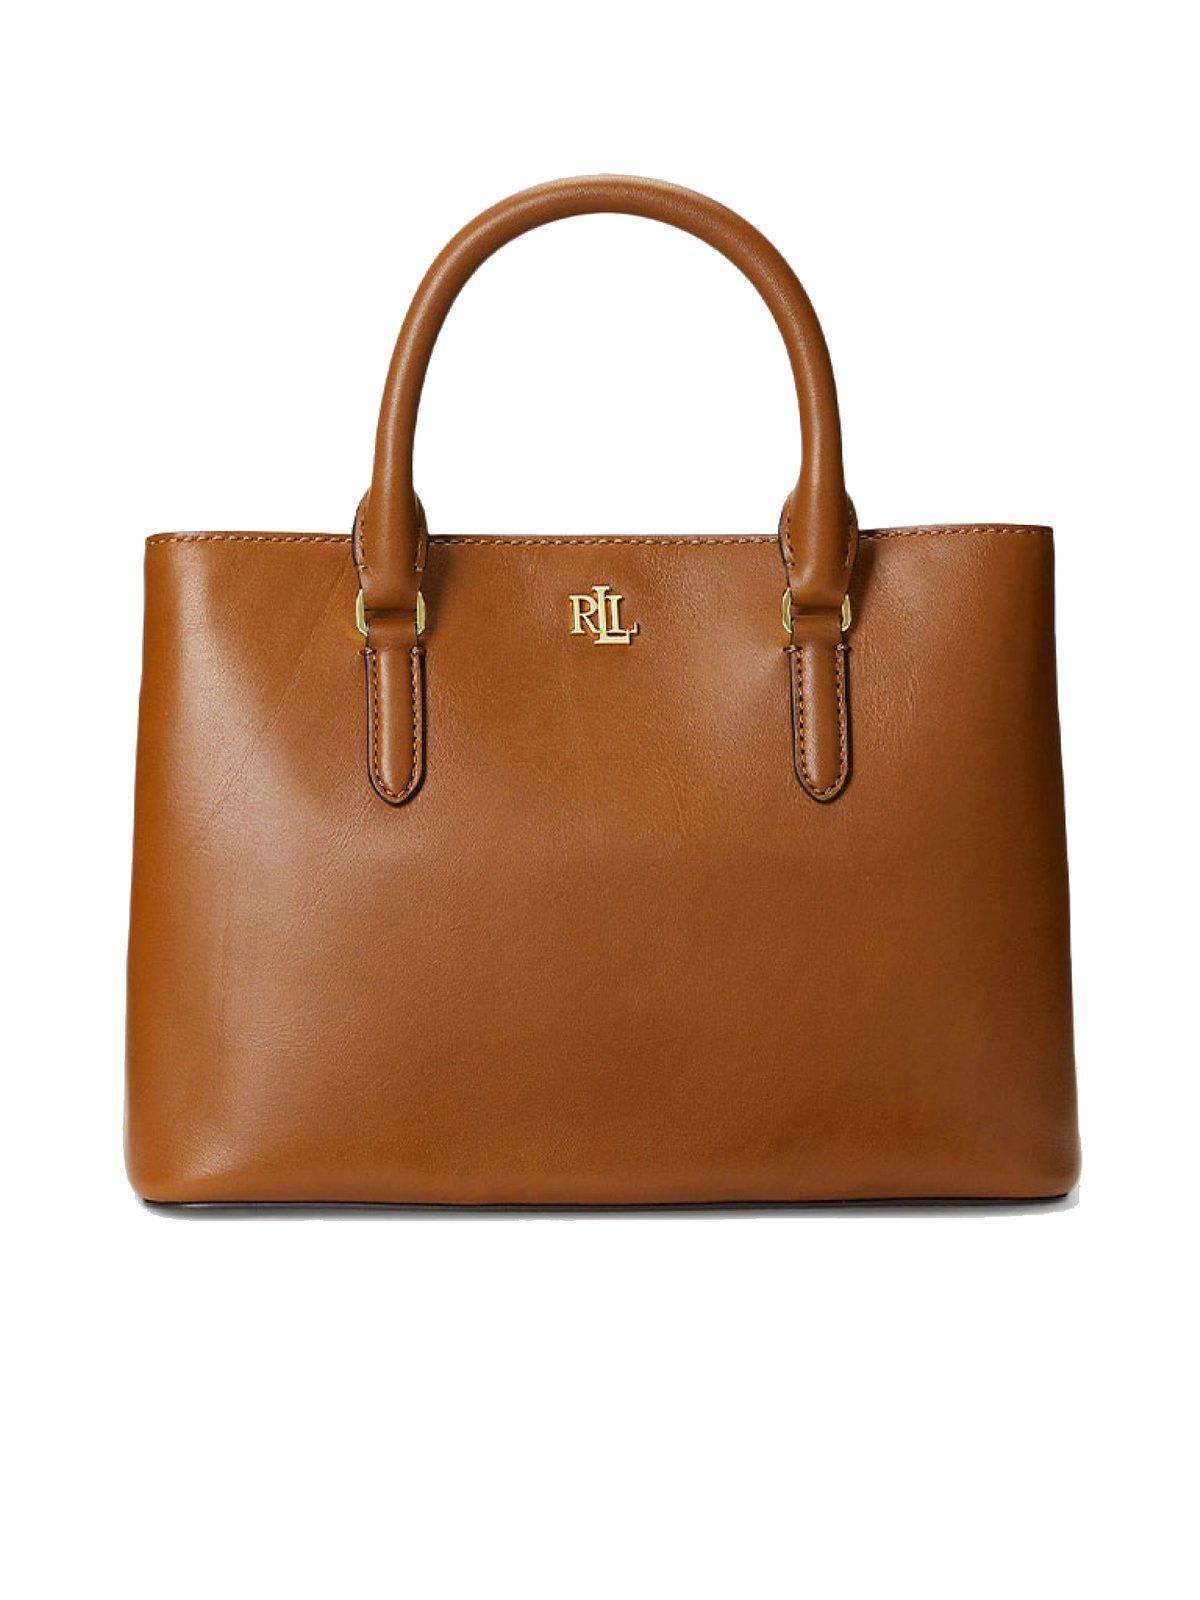 Ralph Lauren Marcy Leather Bag in Brown | Lyst